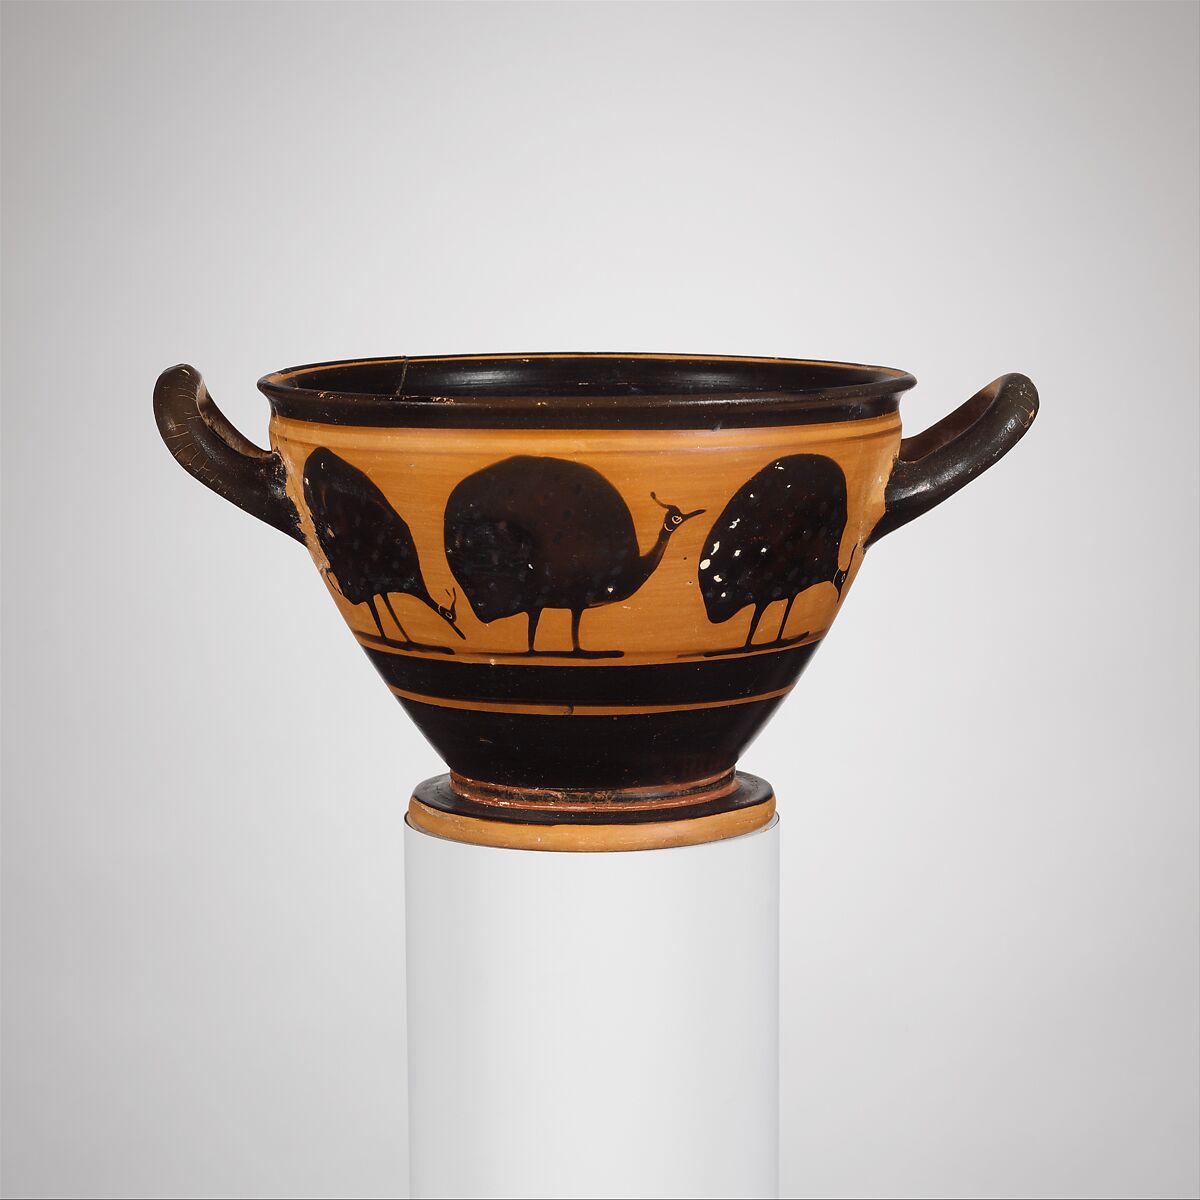 Terracotta skyphos (deep drinking cup), Terracotta, Greek, Attic 